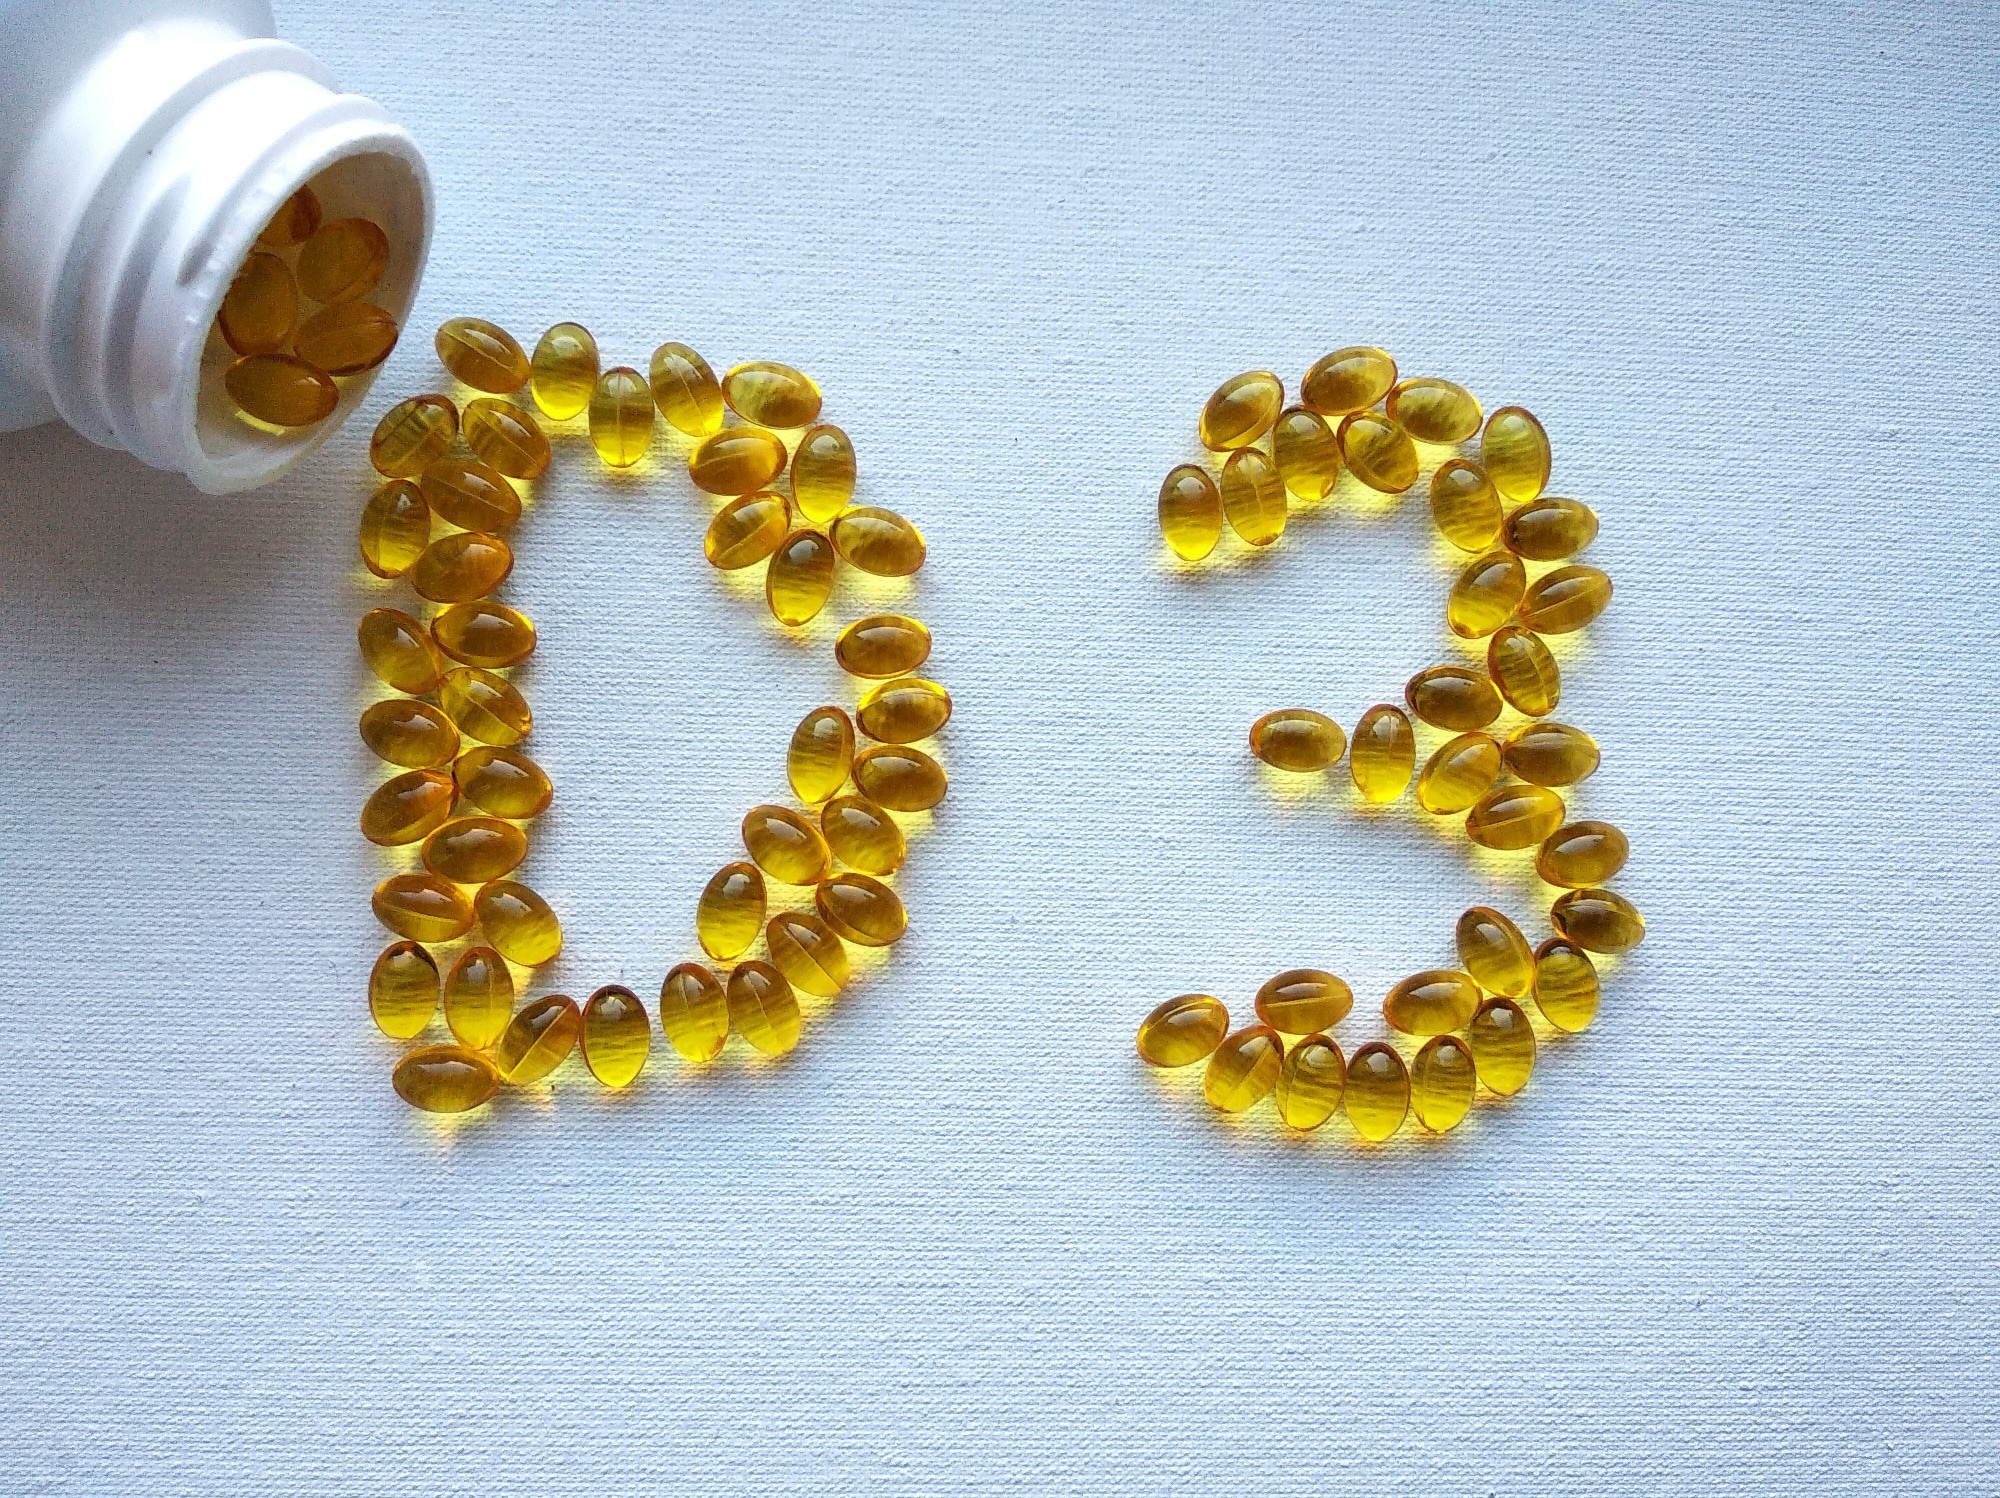 Study: Association between vitamin D supplementation and COVID-19 infection and mortality. Image Credit: Kozachenko Oleksandr / Shutterstock